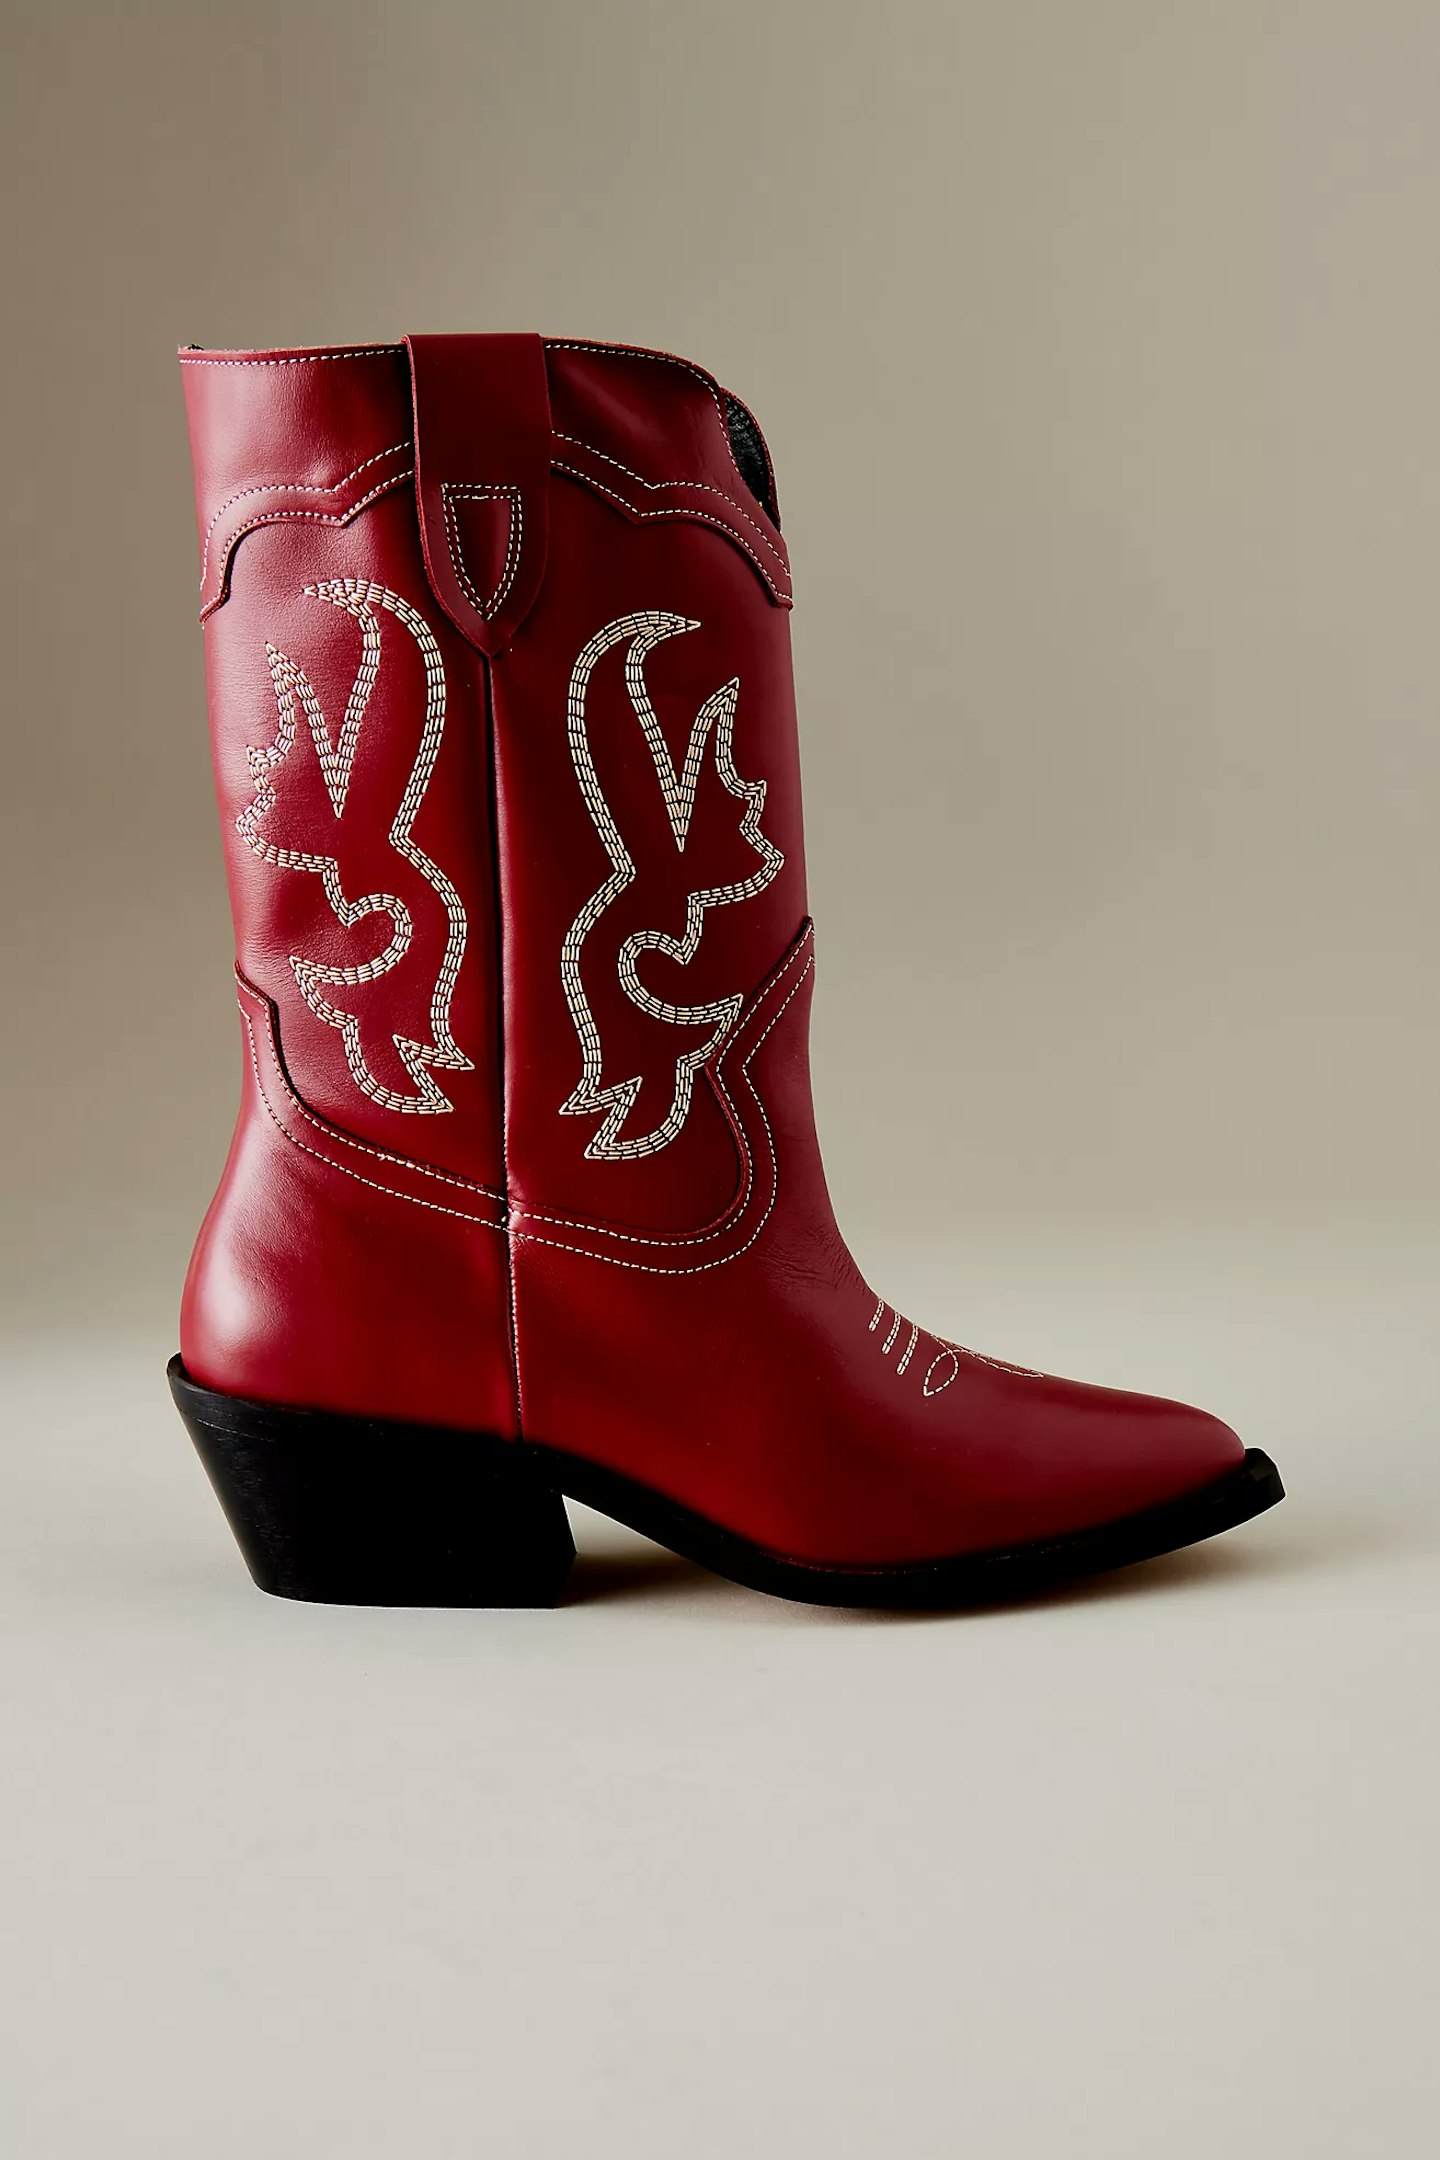 Anthropologie, Western Cowboy Boots